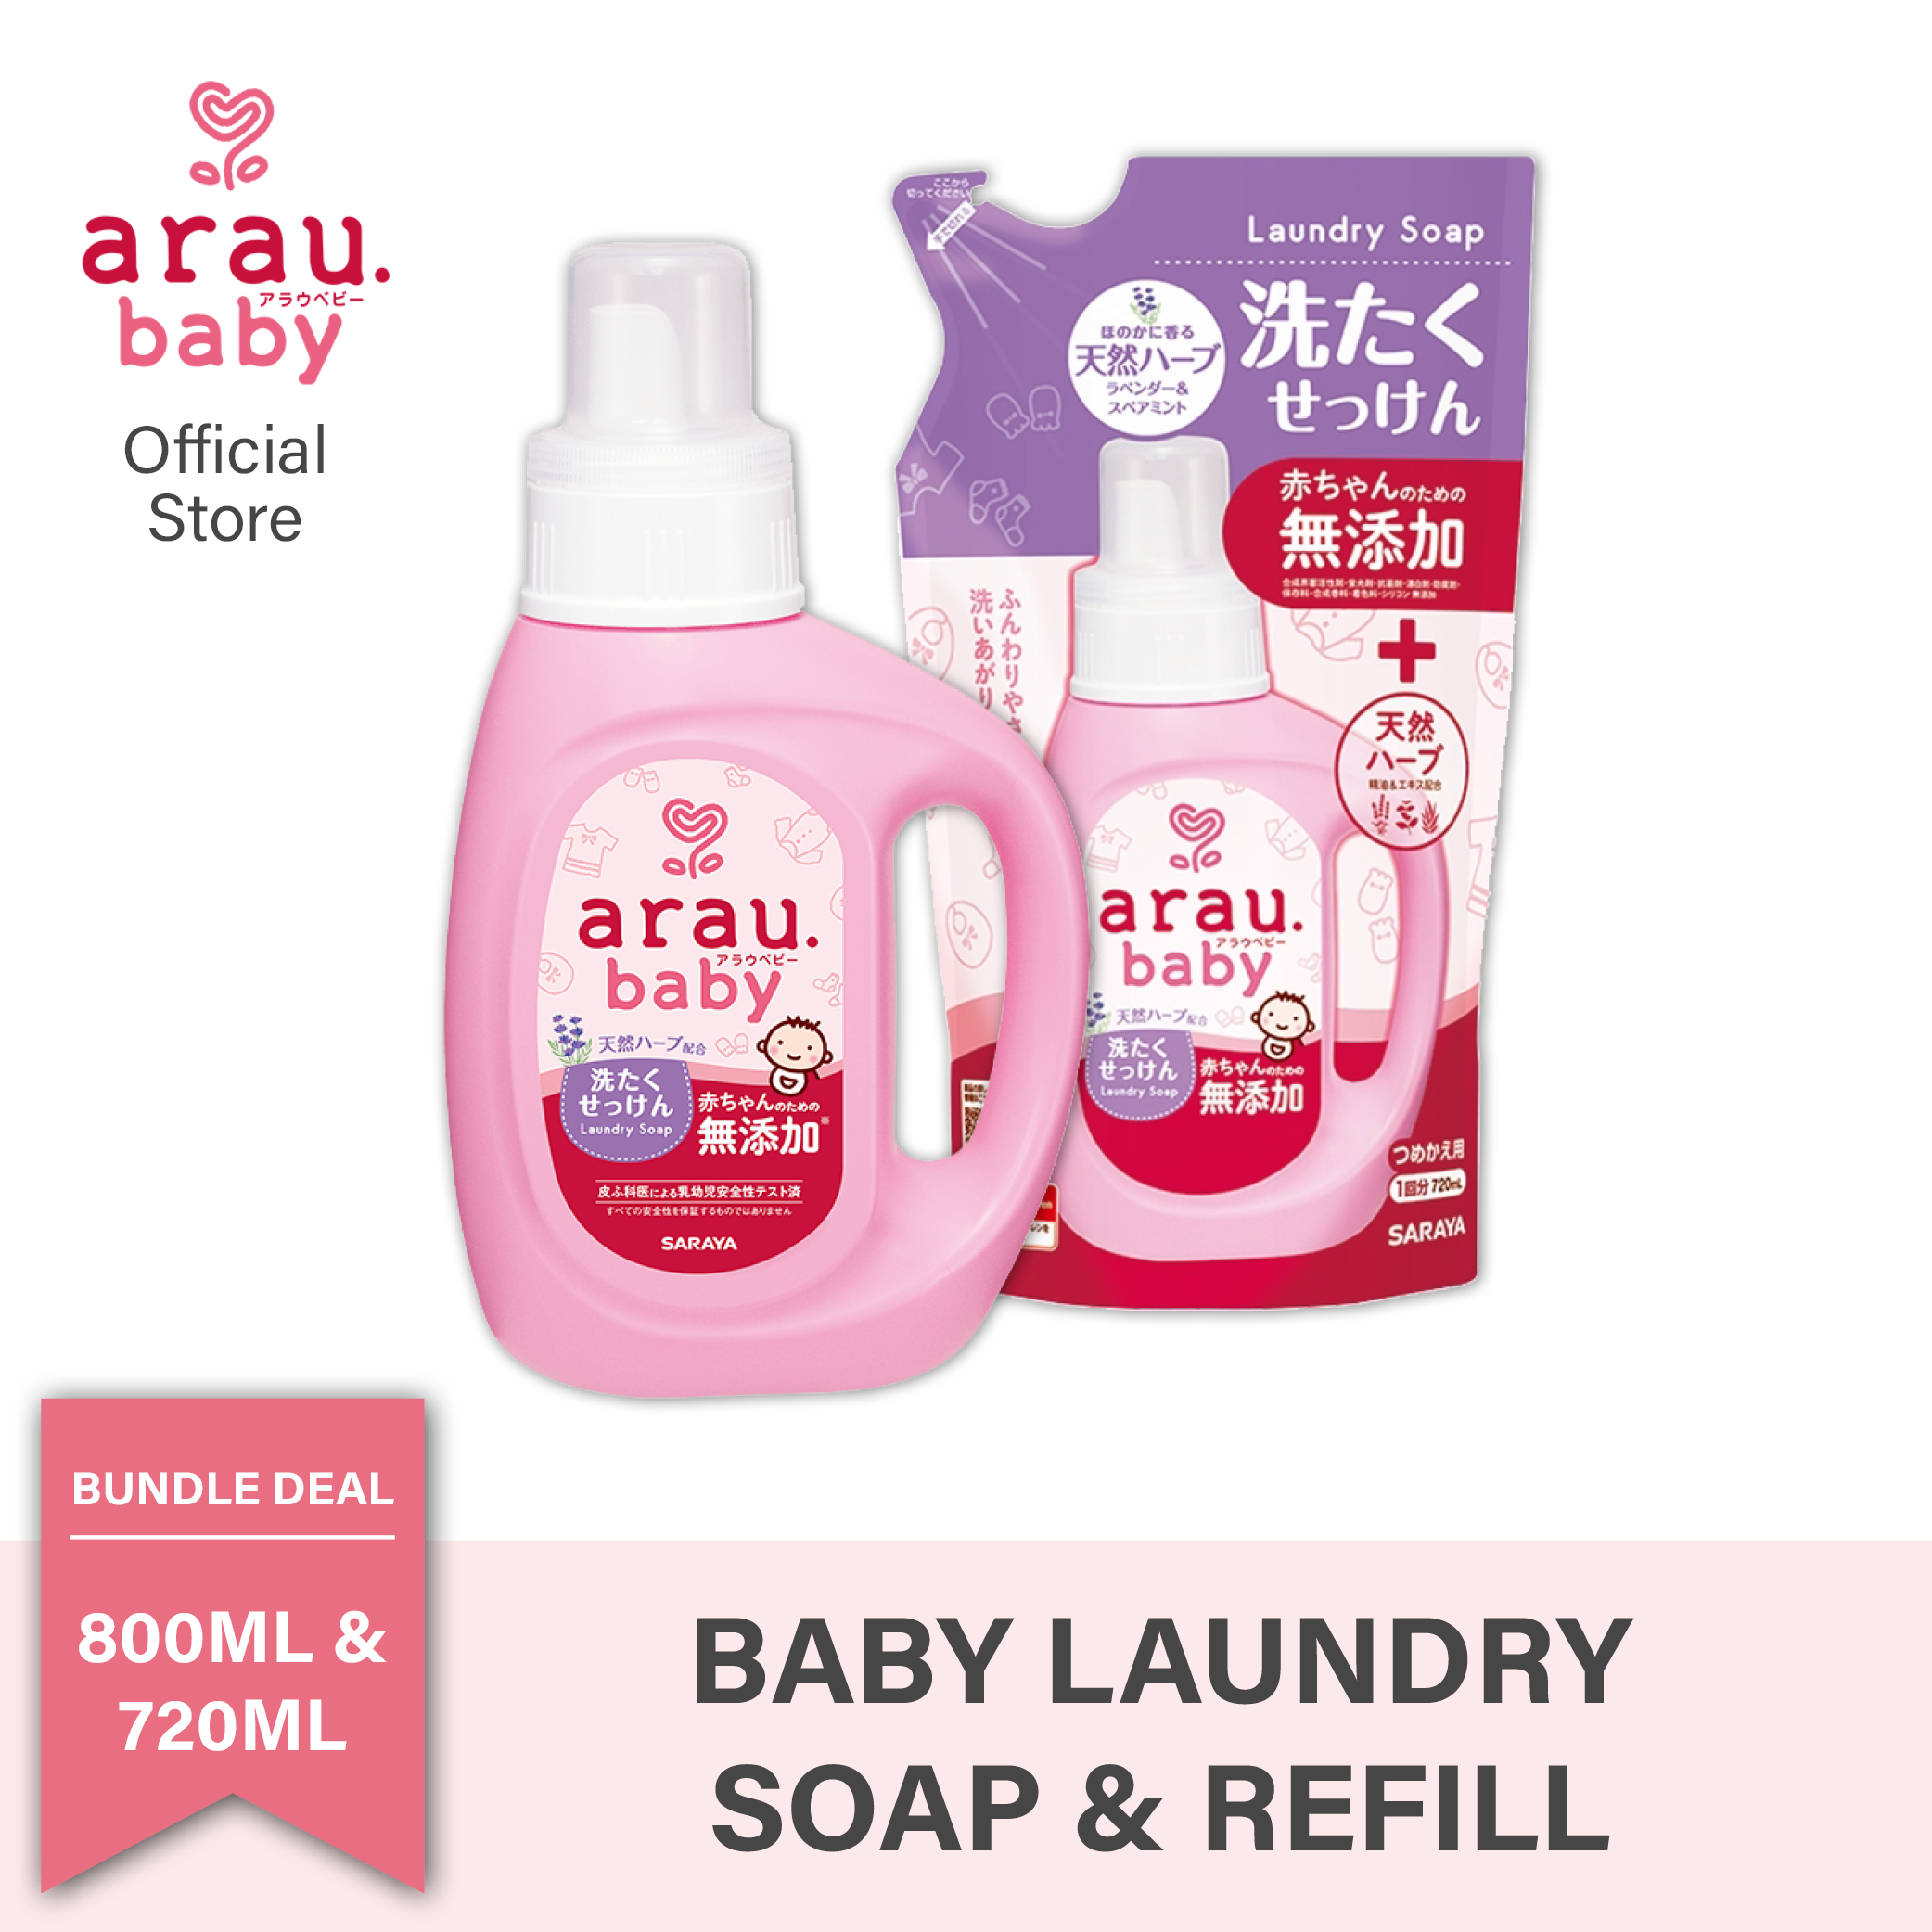 arau.baby Laundry Soap 800ML + Refill 720ML